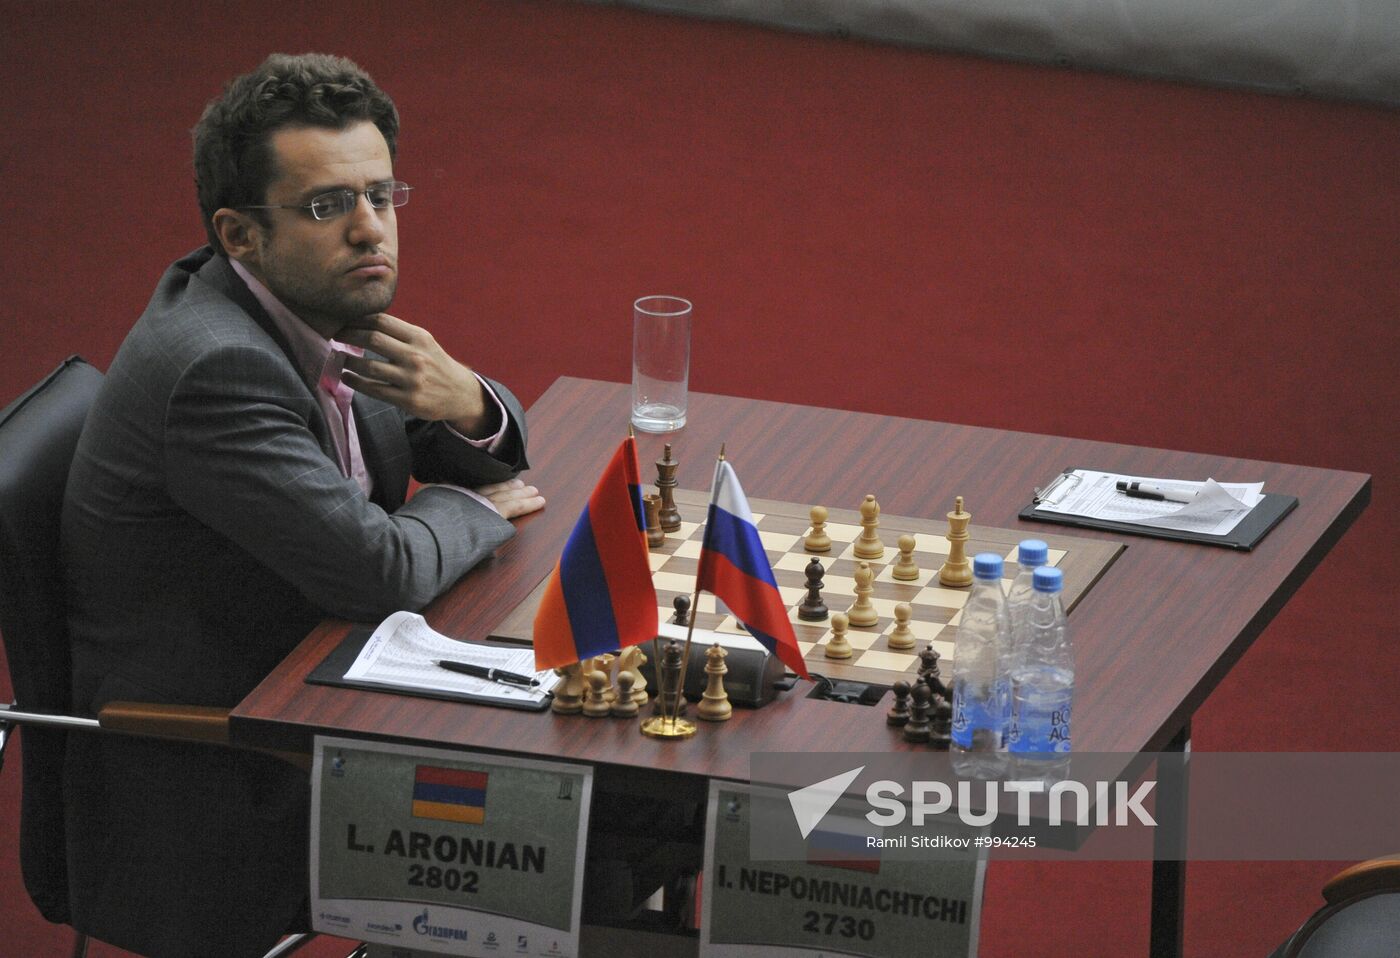 Mikhail Tal Memorial 2011 chess tournament. Final round